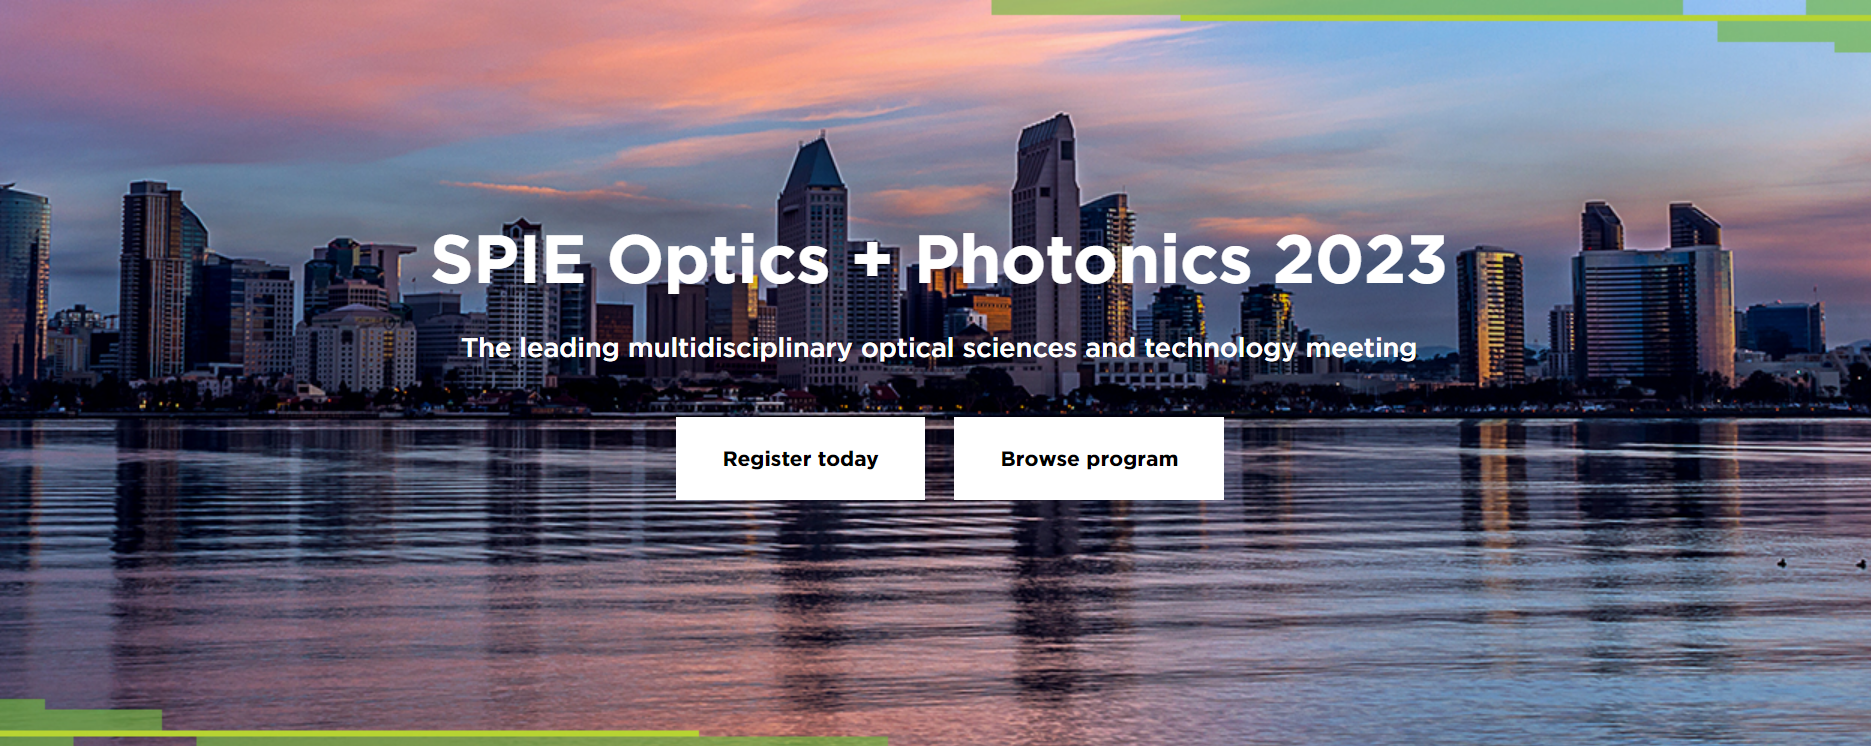 Meet Iridian at SPIE Optics + Photonics 2023